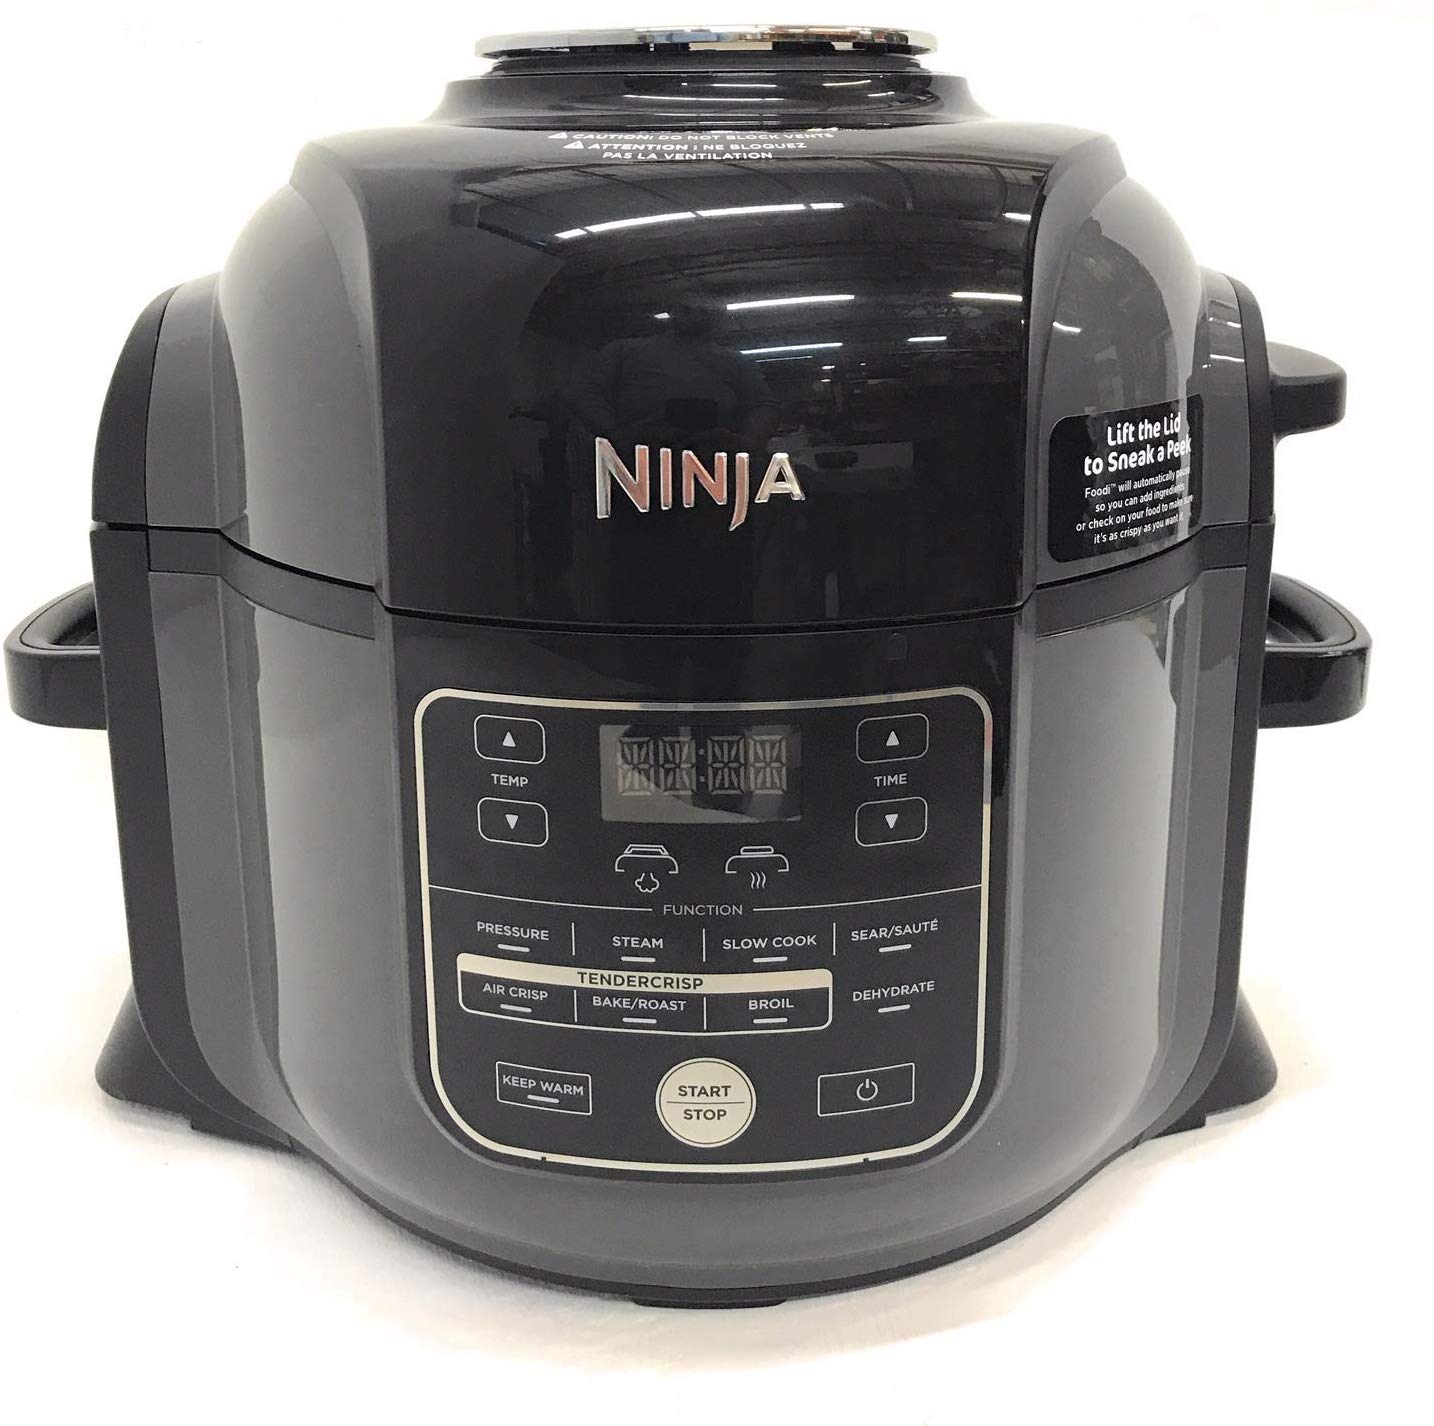 ninja pressure cooker foodi pot renewed family fries pounds roasts pound sized fits work